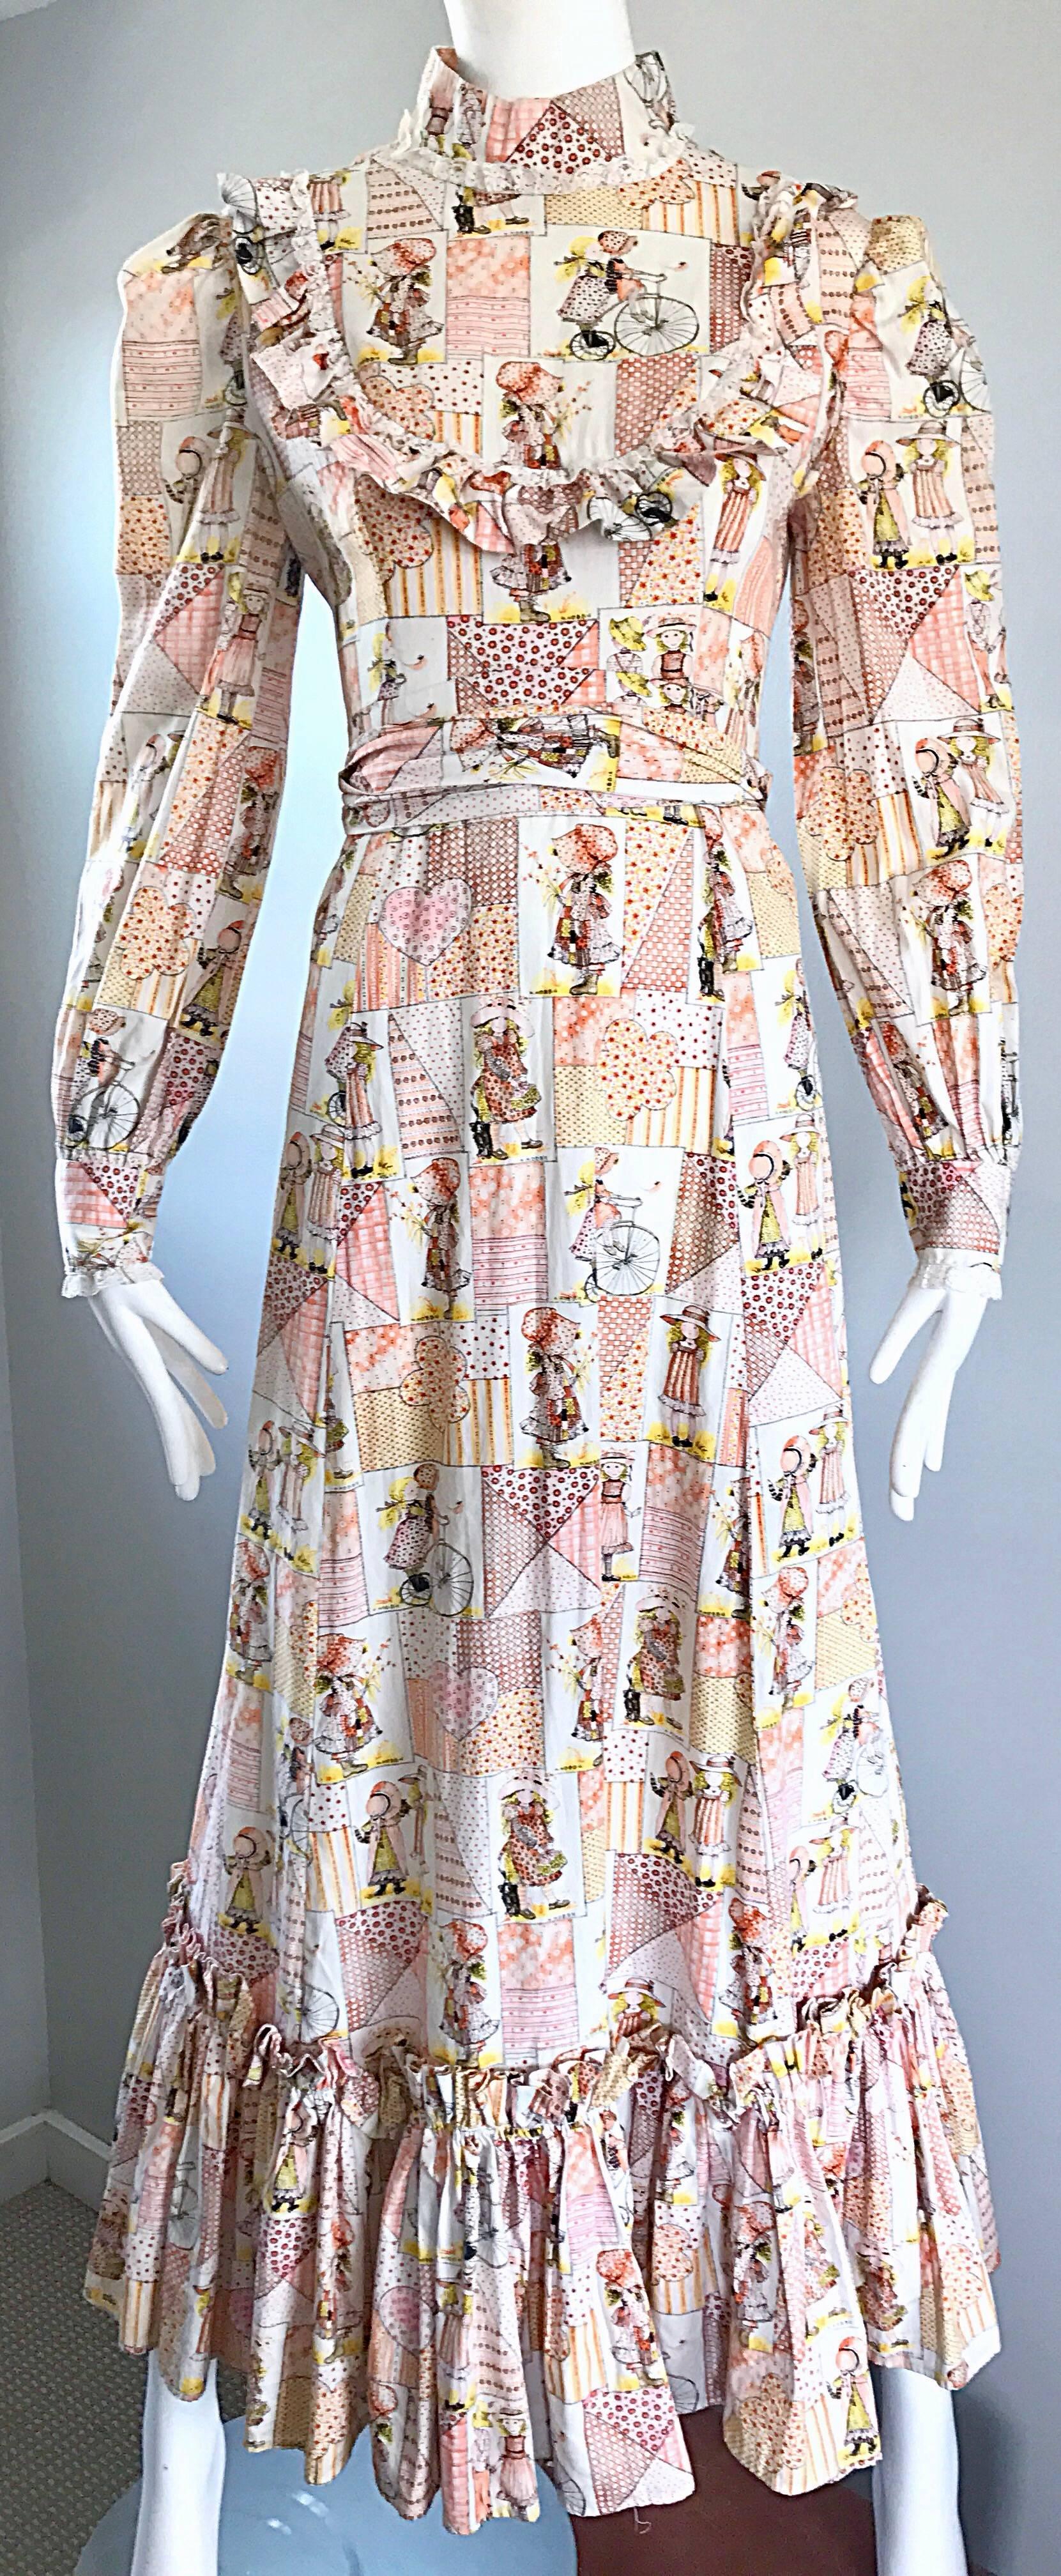 Beige 1970s Holly Hobbie Novelty Print Victorian Inspired Cotton Vintage Maxi Dress